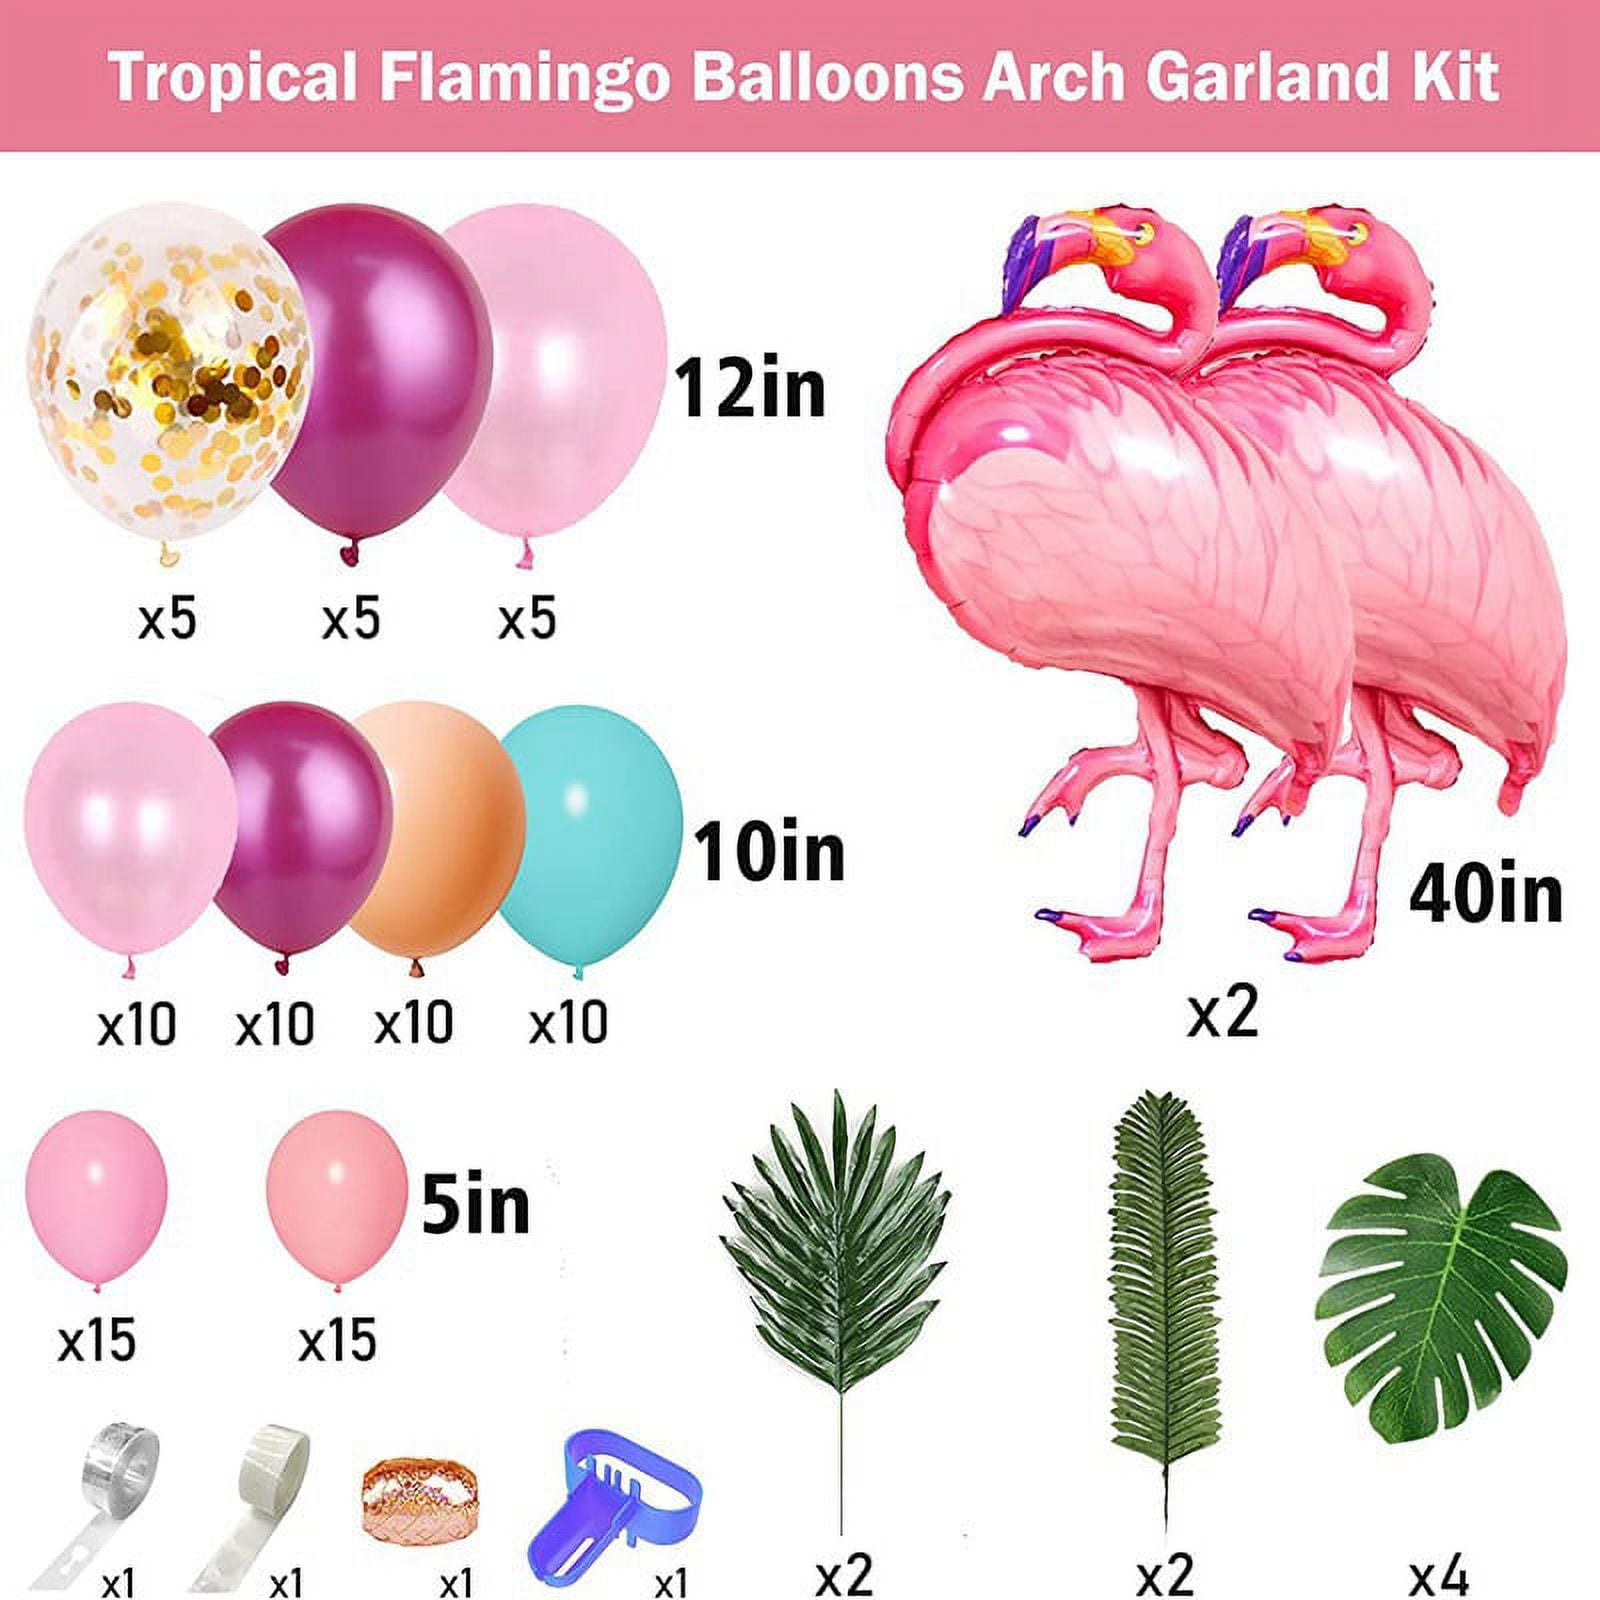 Kit 40 ballons rose blanc or et confetti or